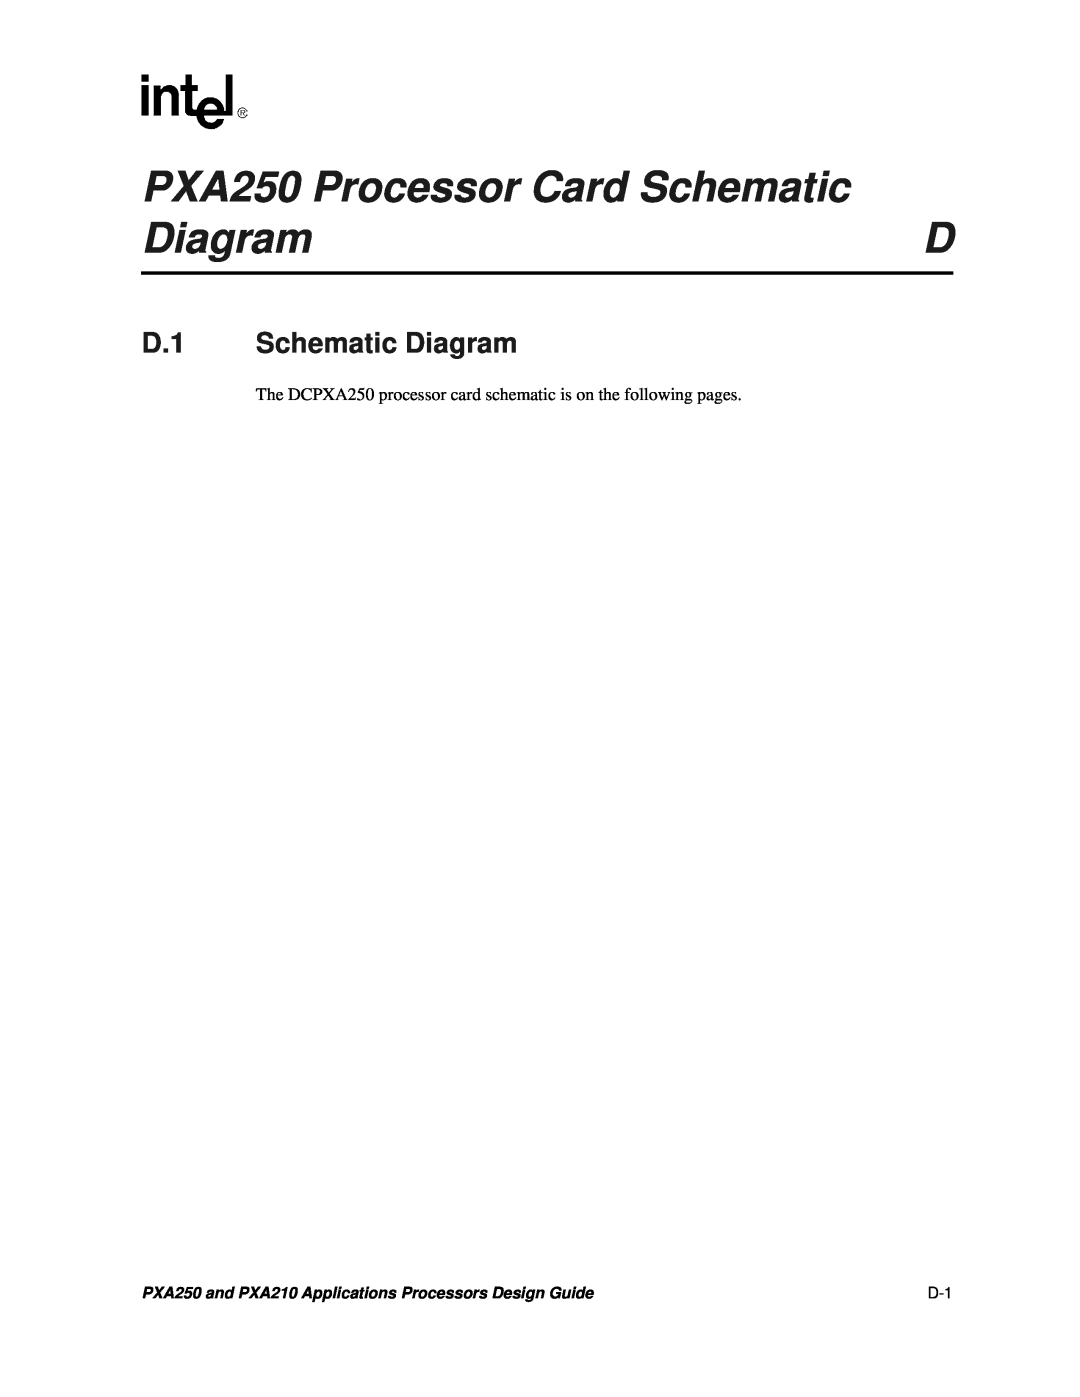 Intel PXA250 and PXA210 manual PXA250 Processor Card Schematic, D.1 Schematic Diagram 